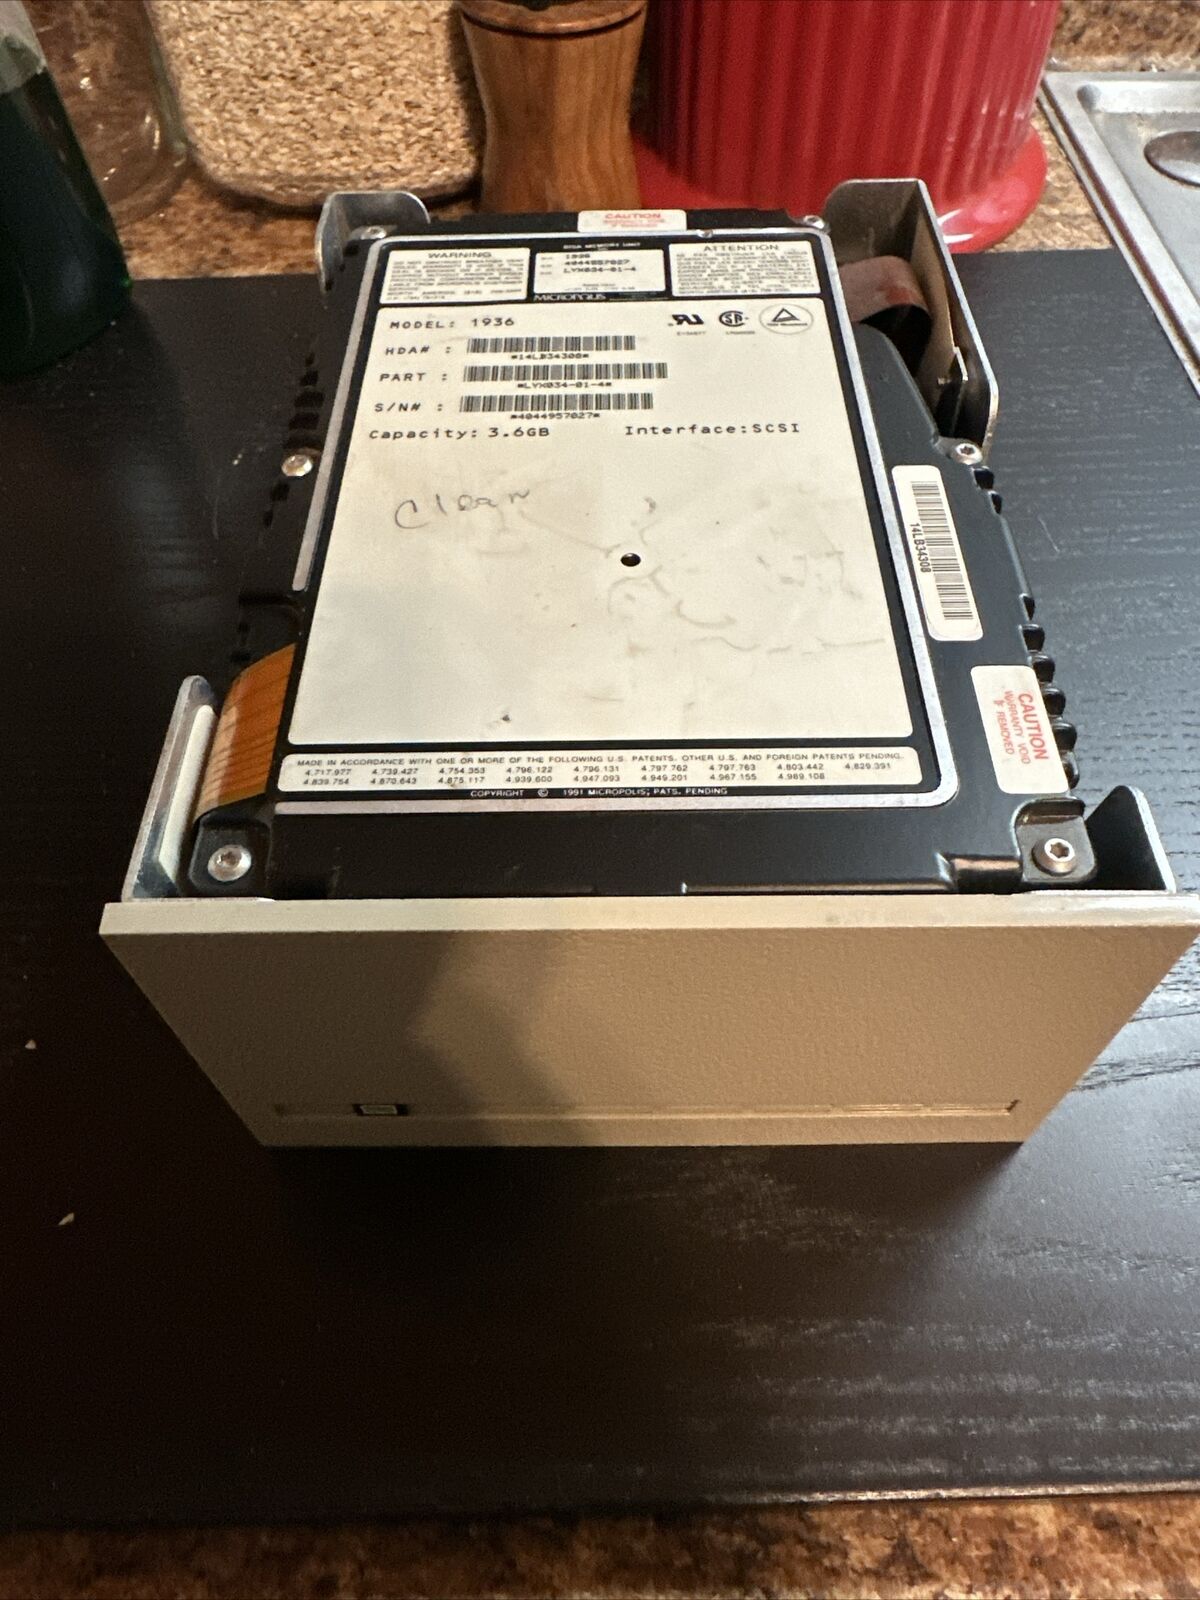 Micropolis 1936 3.6GB 5.25